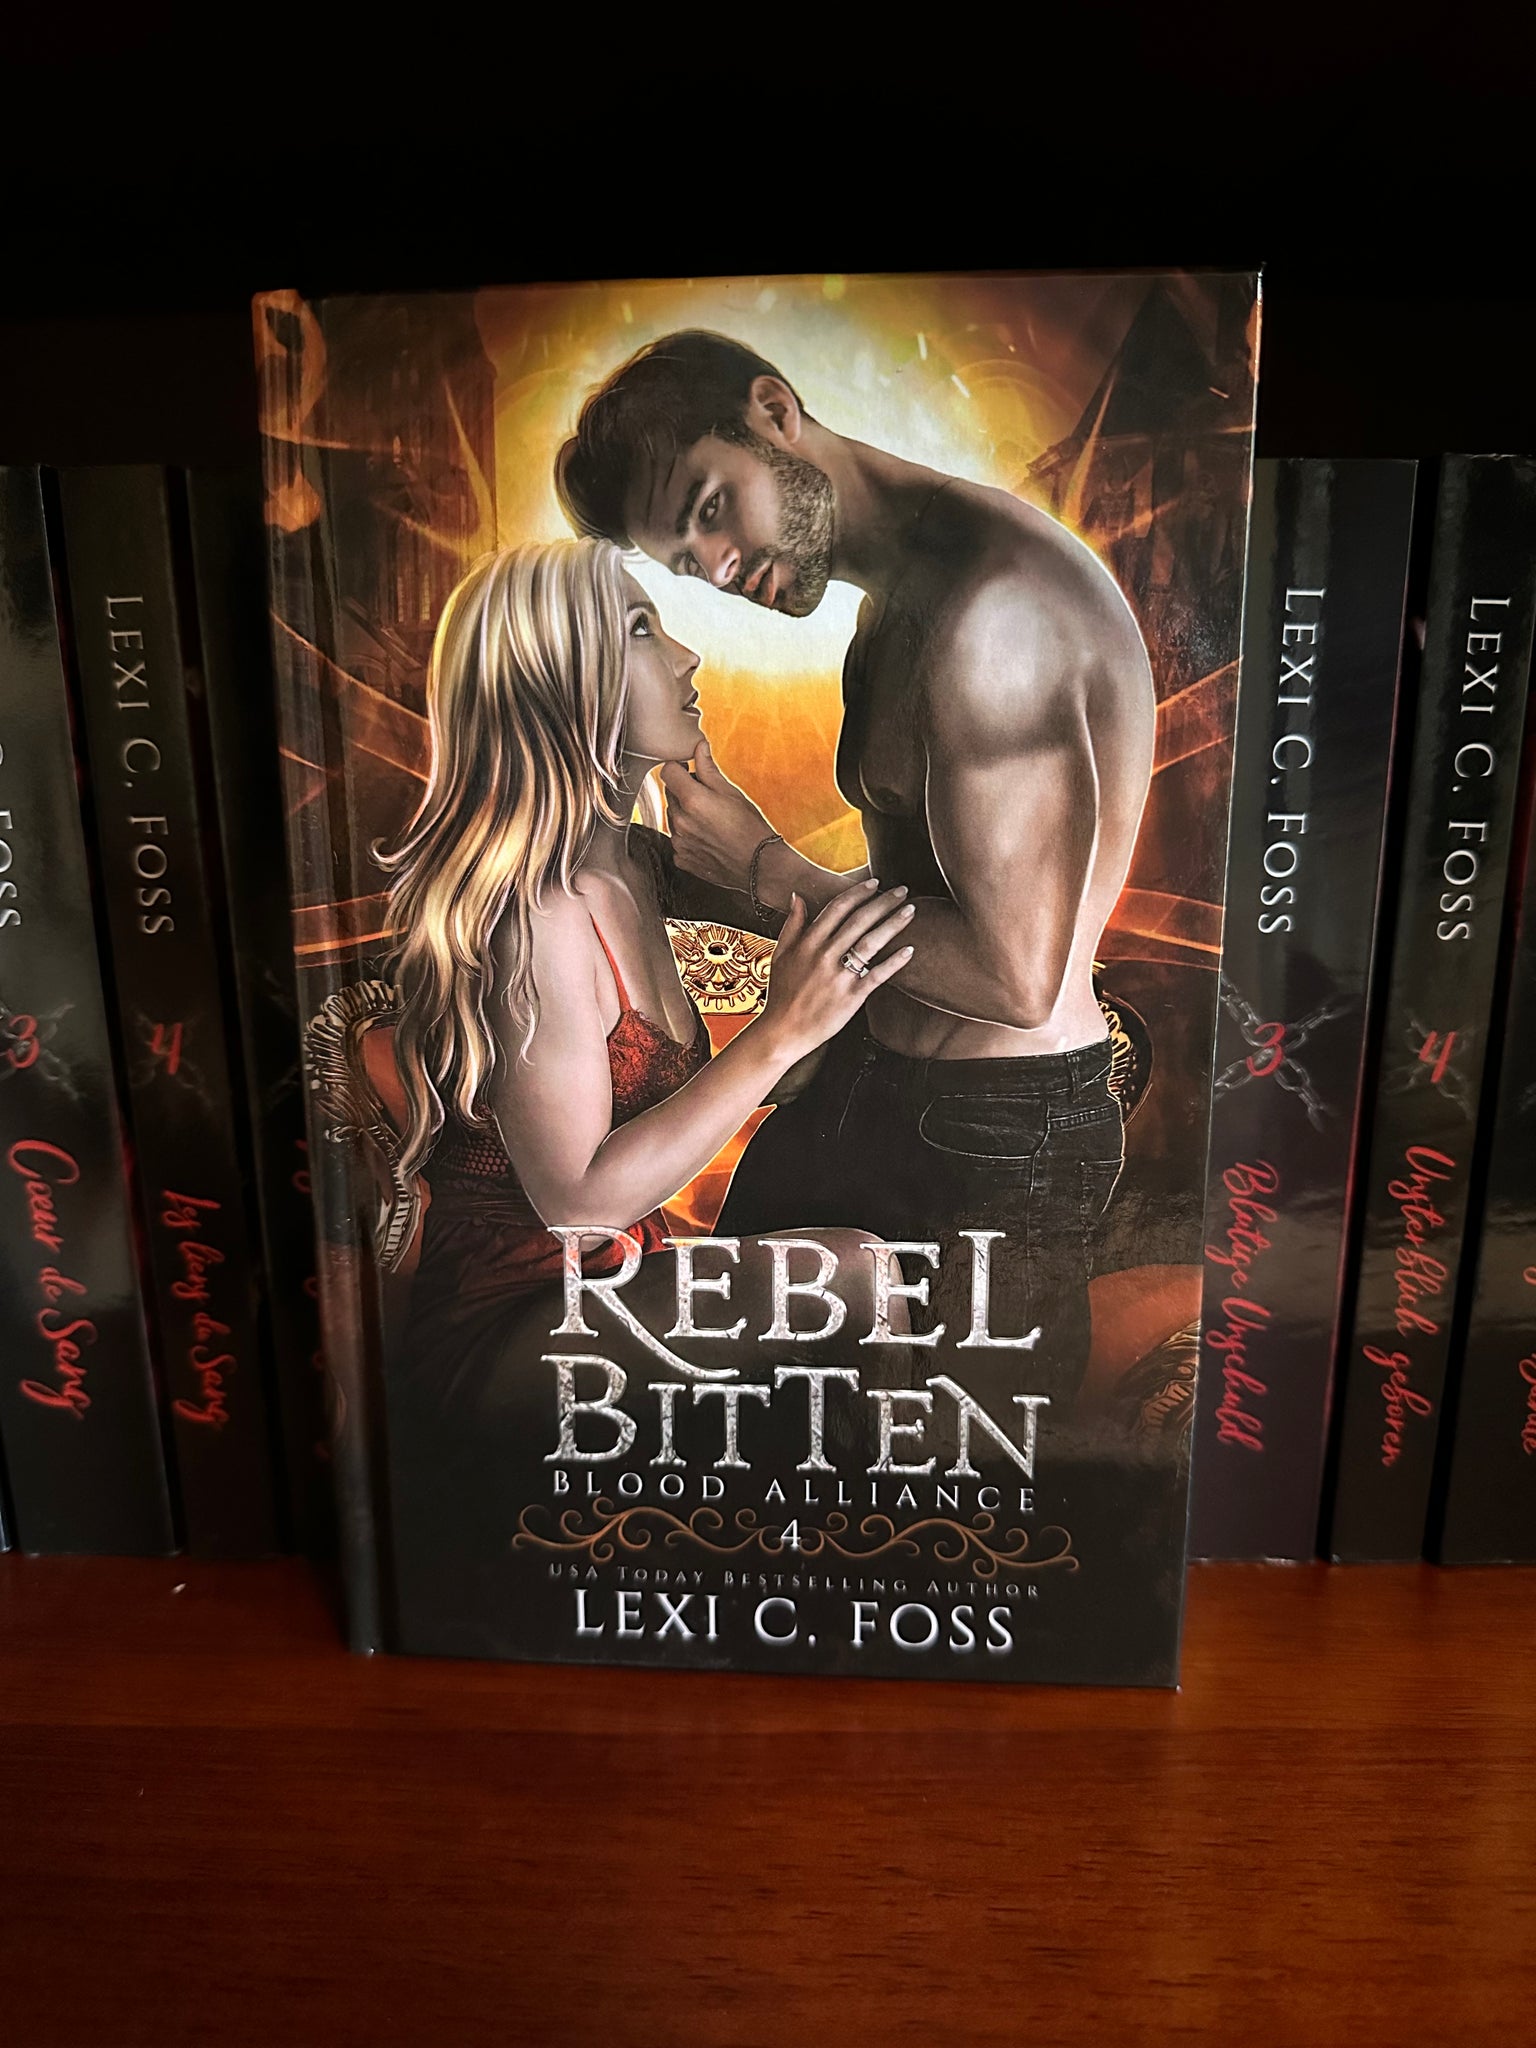 Rebel Bitten- Hardcover (Blood Alliance: Book 4)